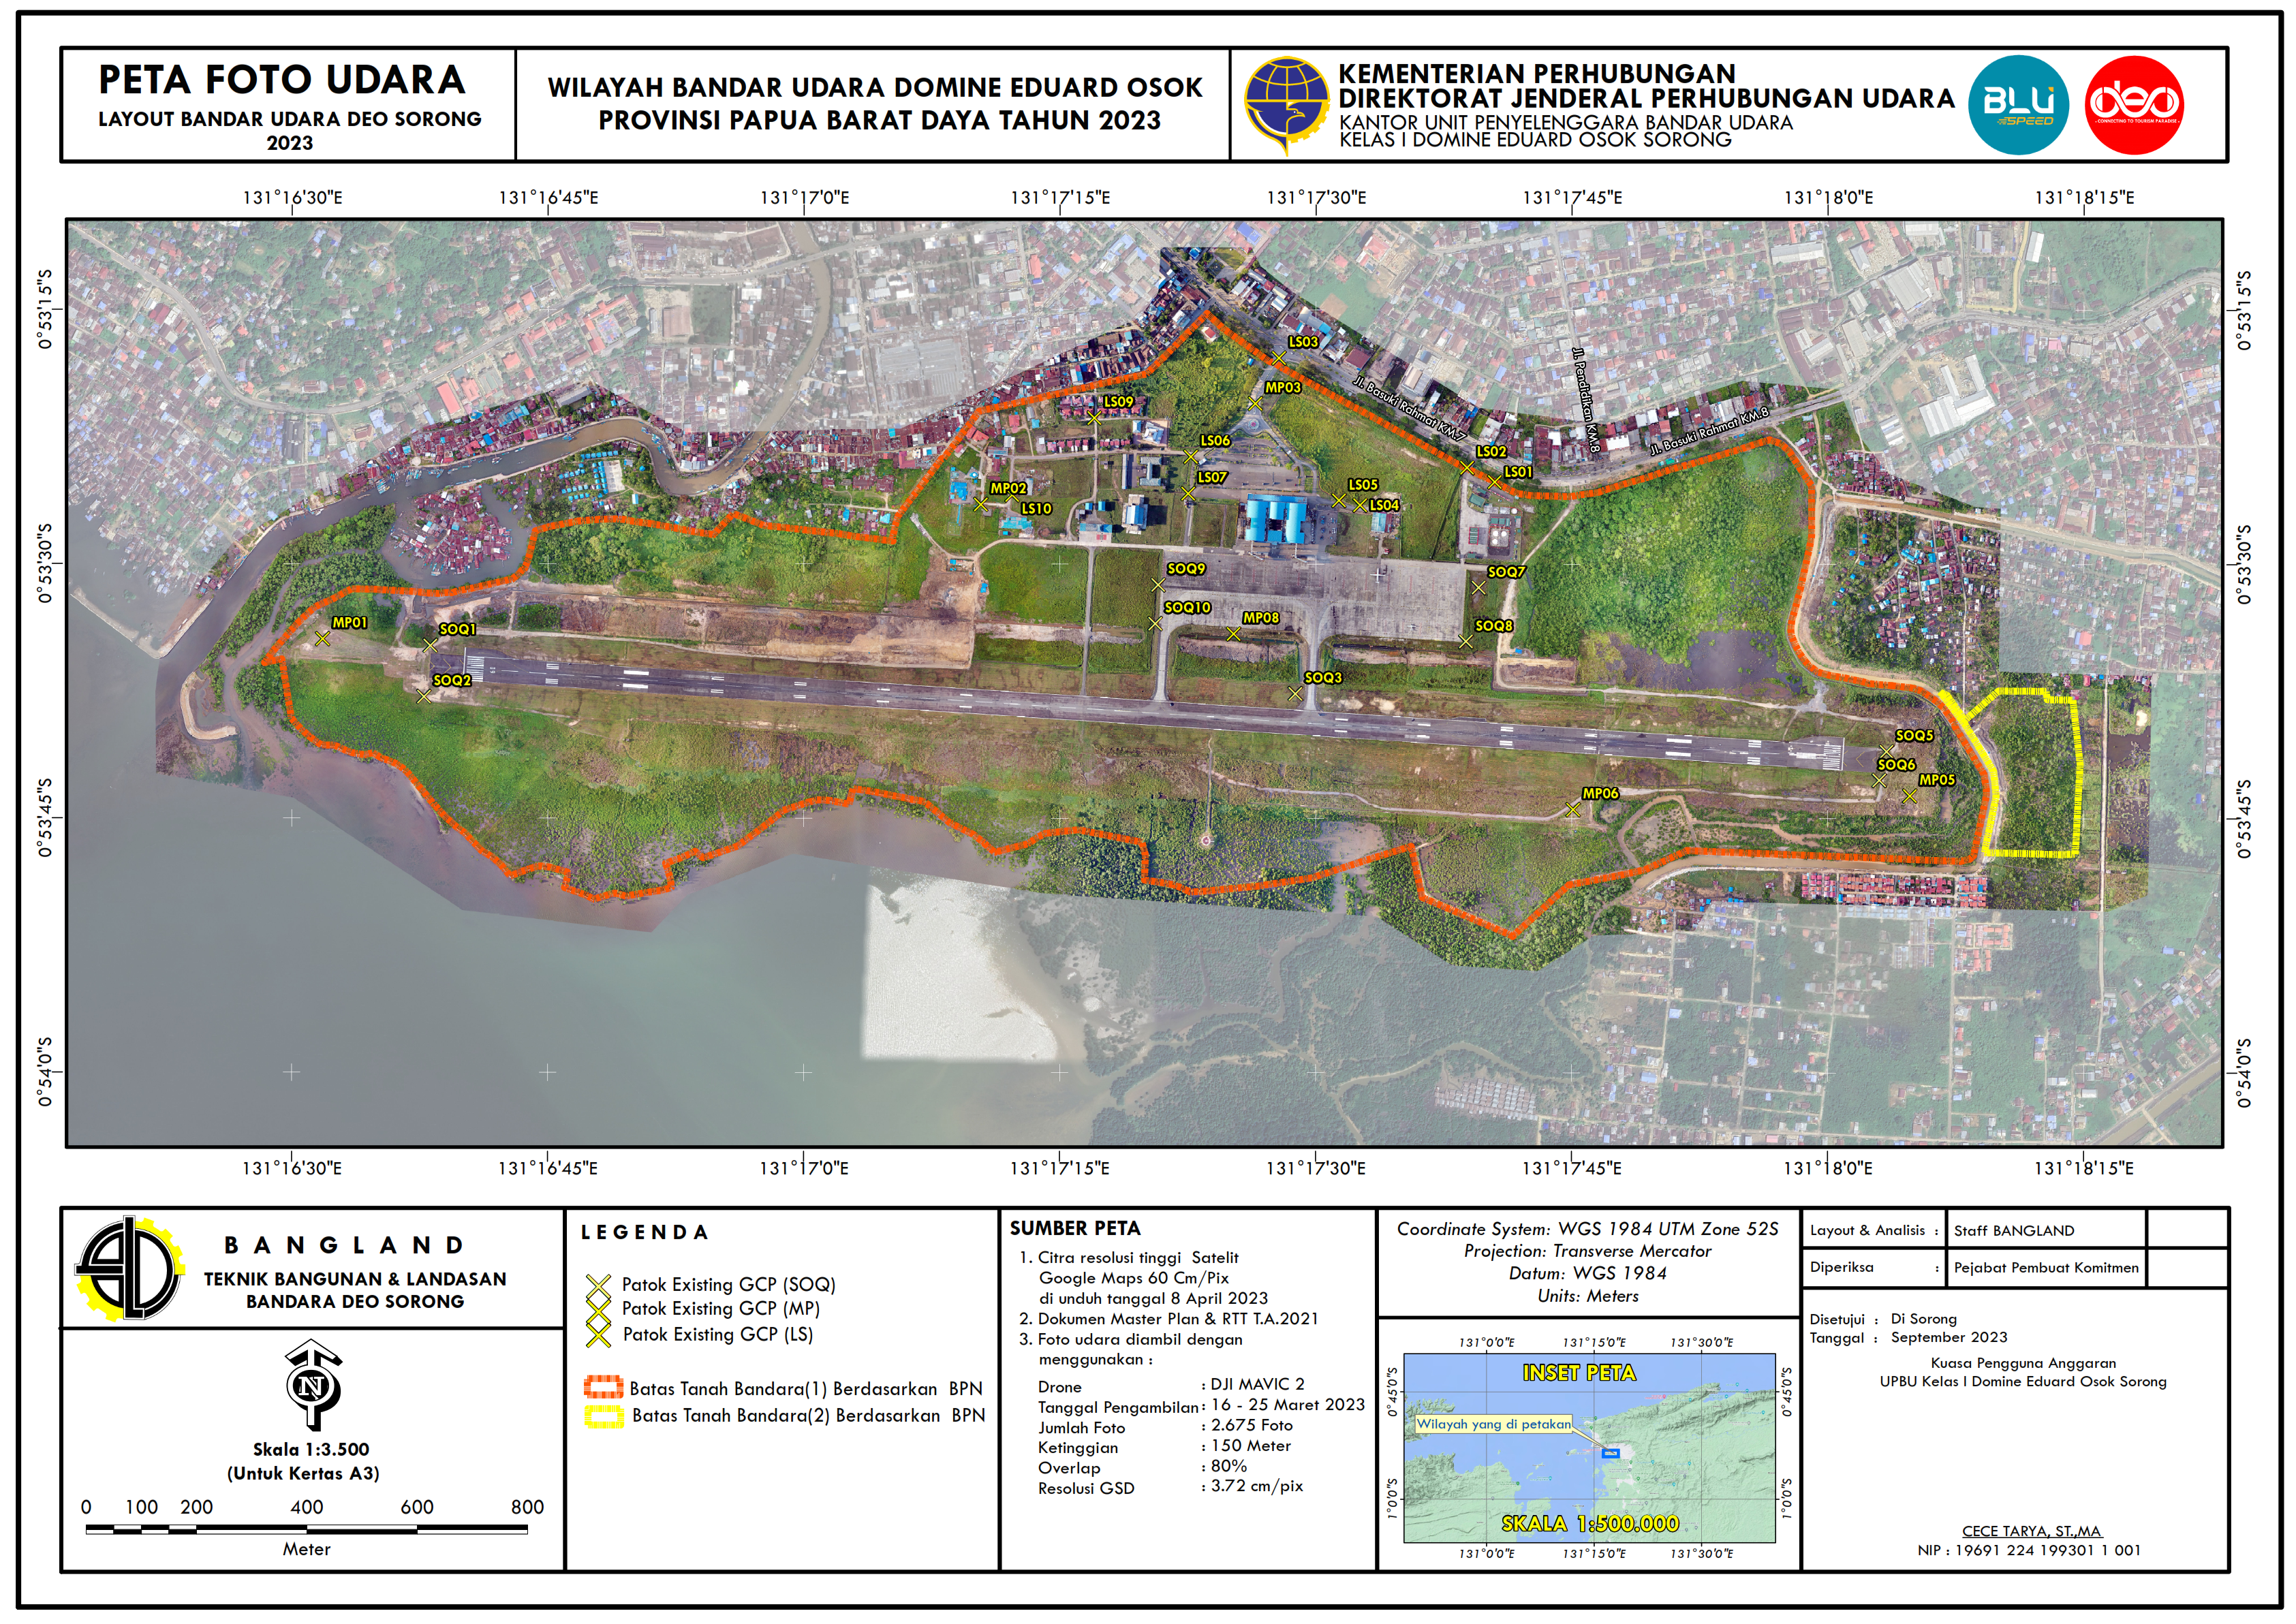 Gambar Peta Bandara Layout Bandar Udara Domine Eduard Osok